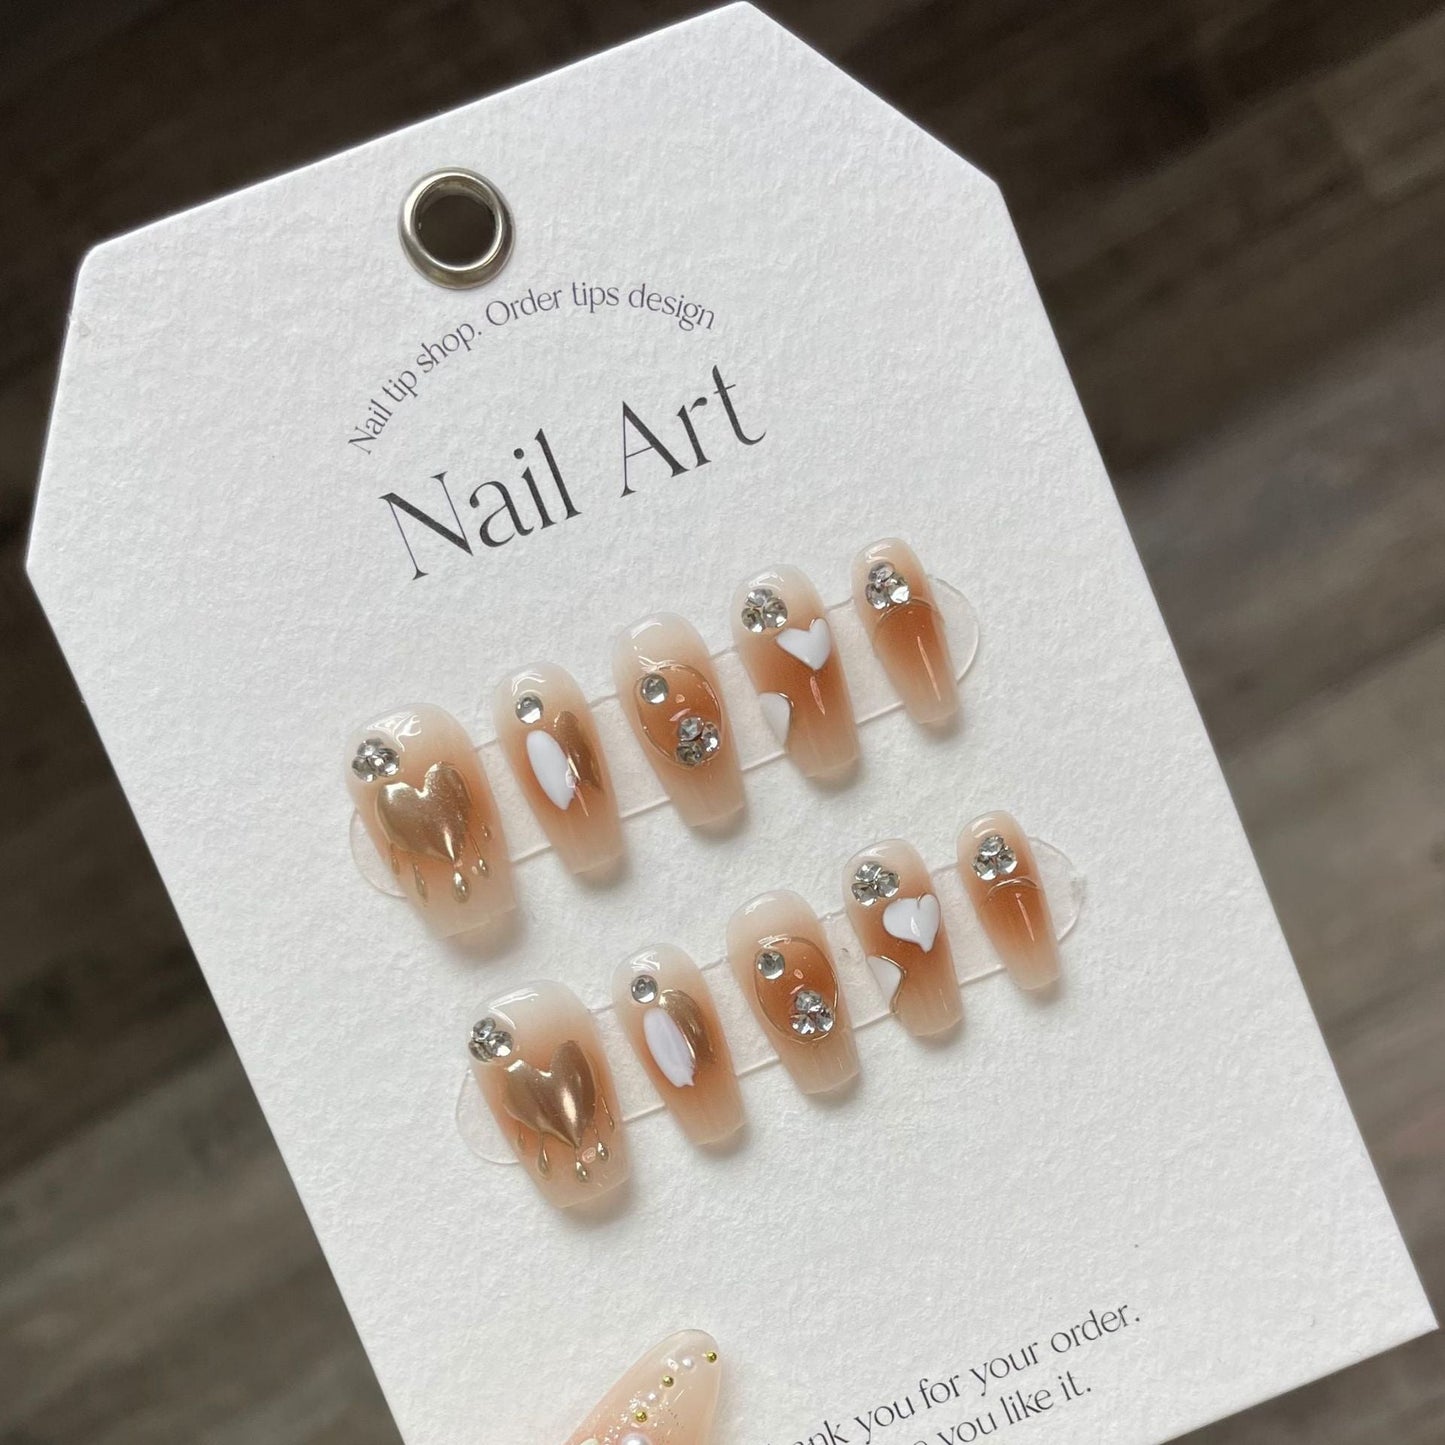 591/944 Cream Heart style press on nails 100% handmade false nails nude color